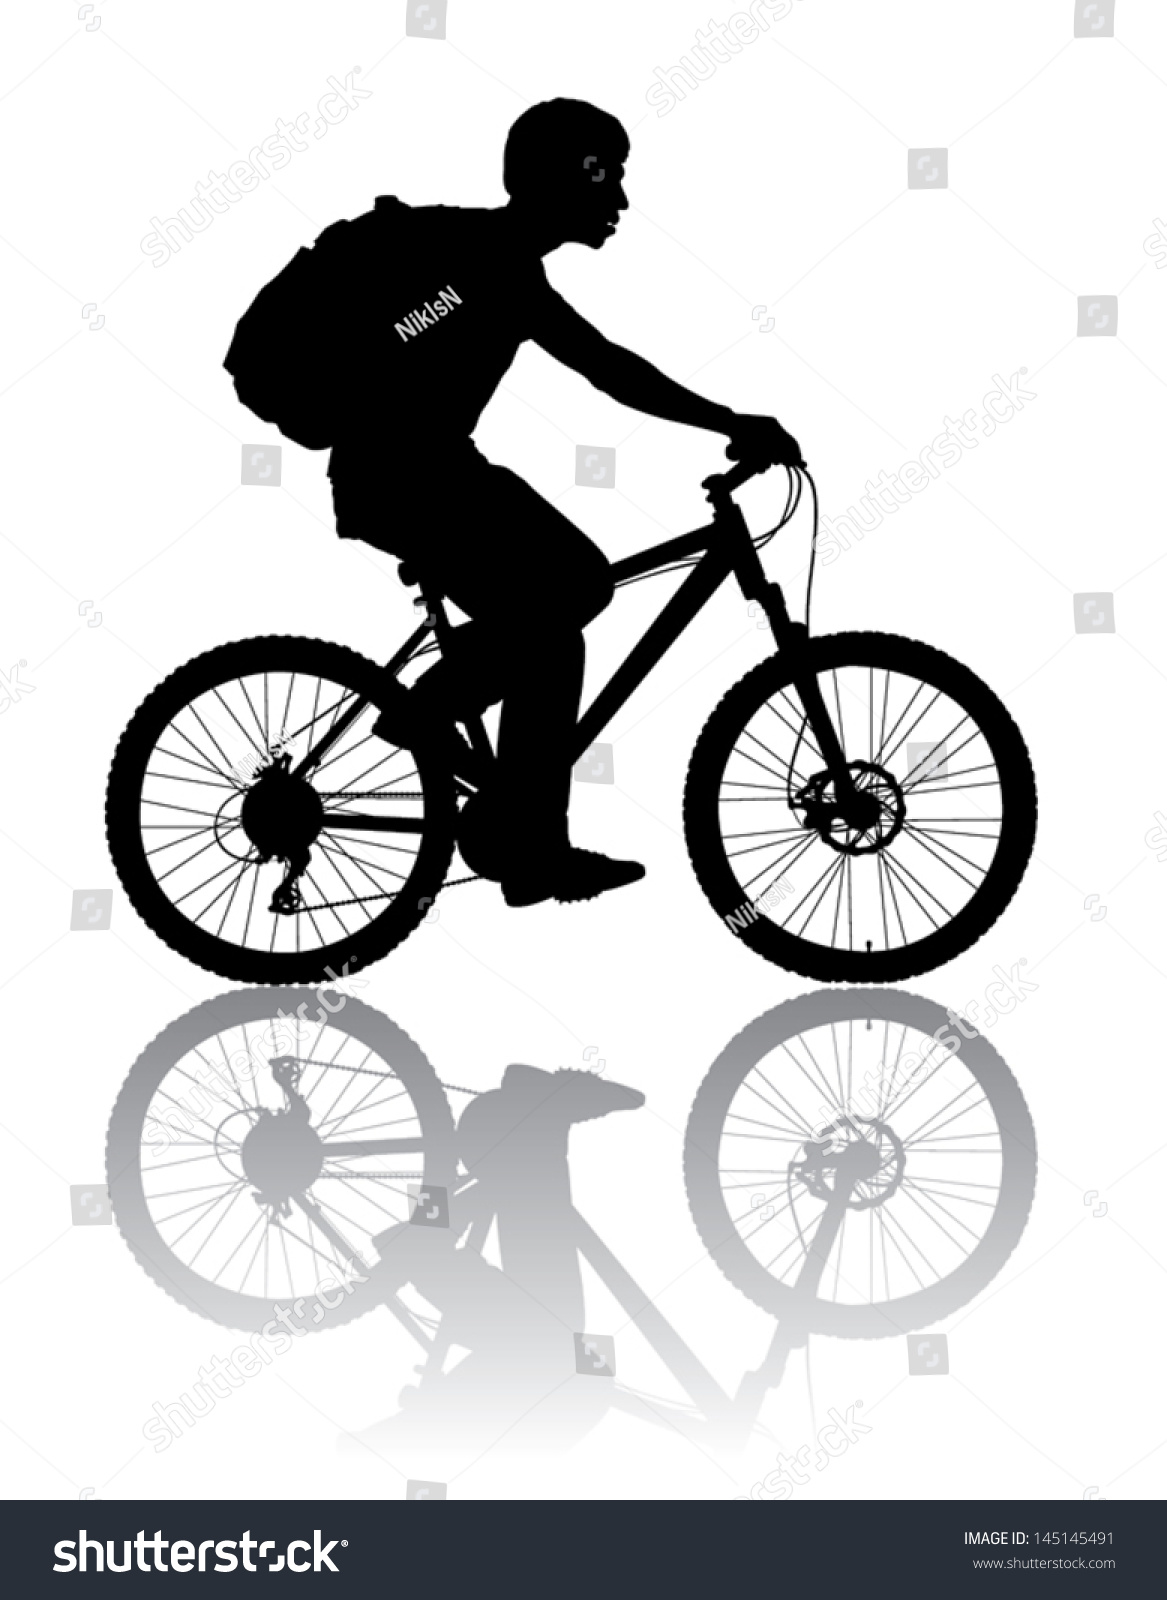 boy riding a bike clipart - photo #48